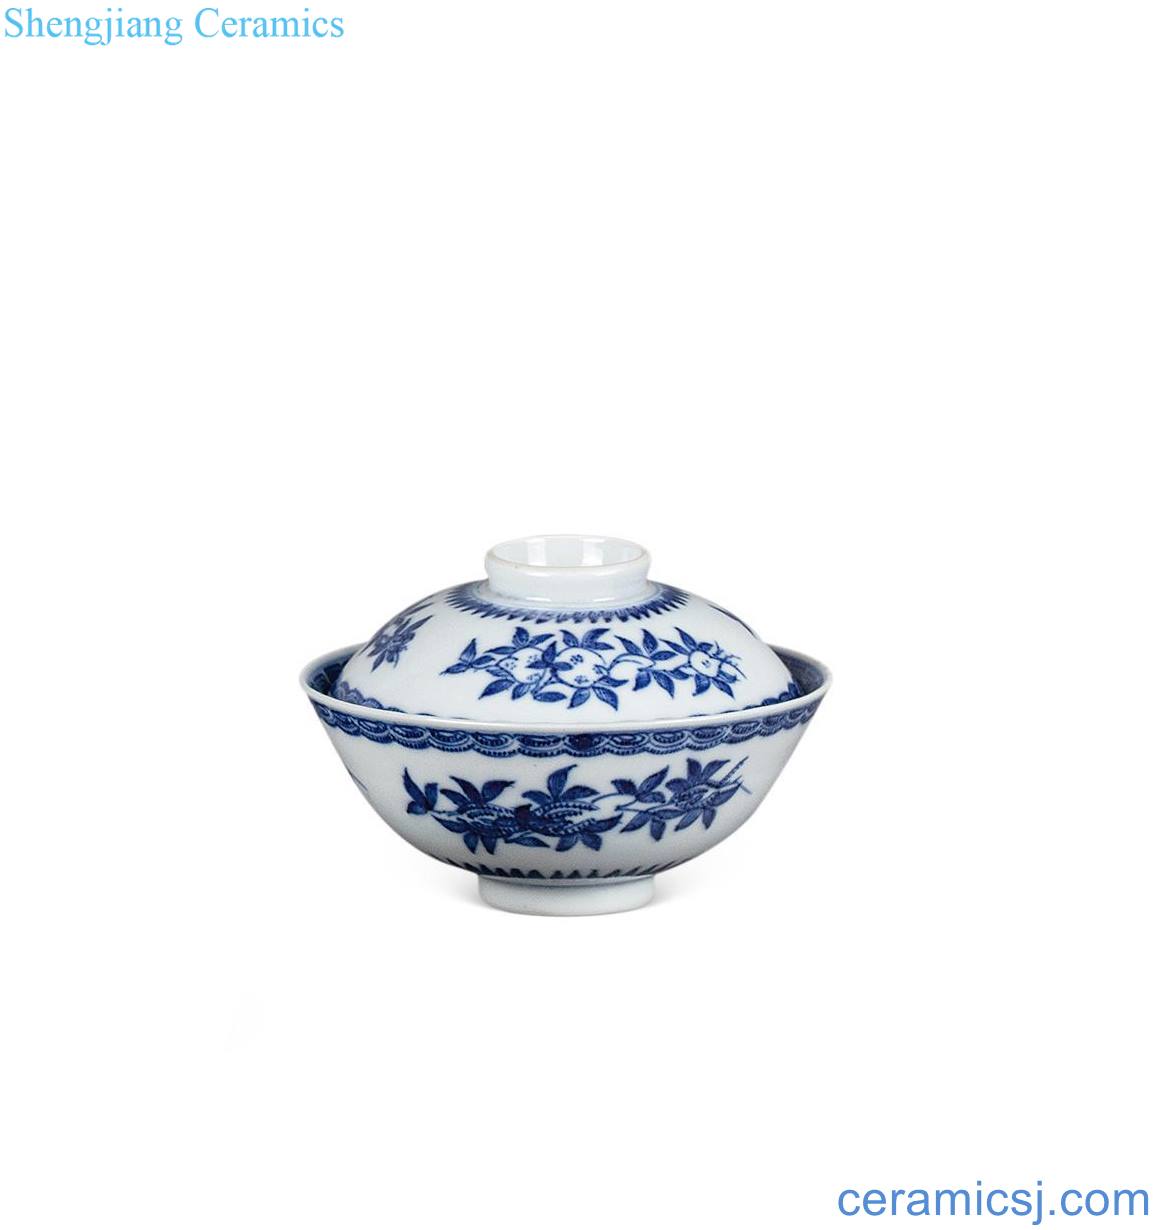 Qing dynasty blue-and-white sanduo grain tureen